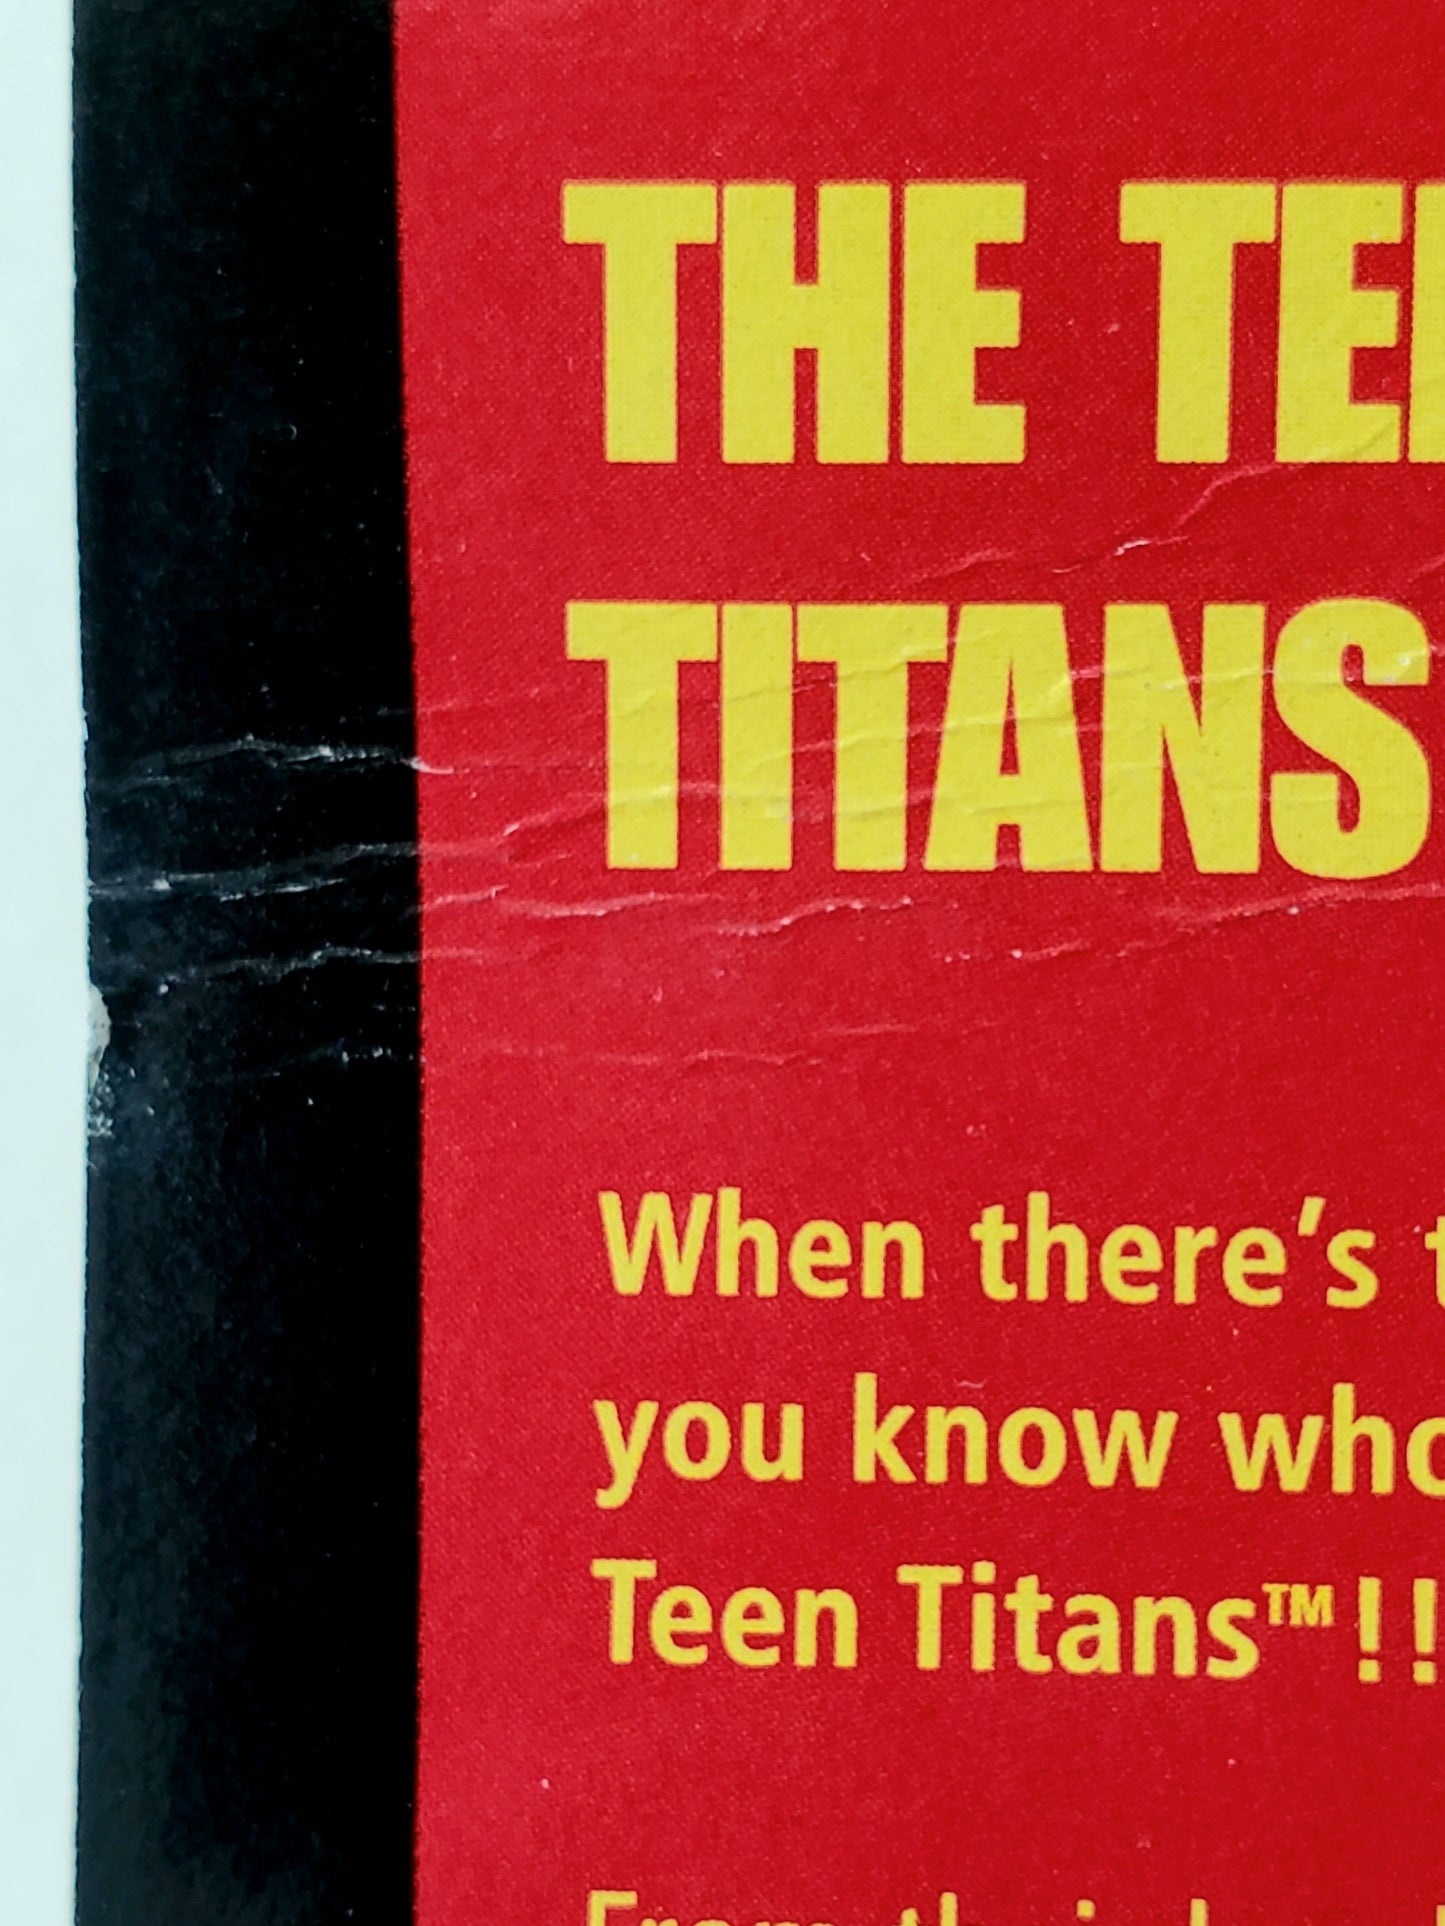 Teen Titans Robin & Beast Boy 3.5-Inch Action Figures